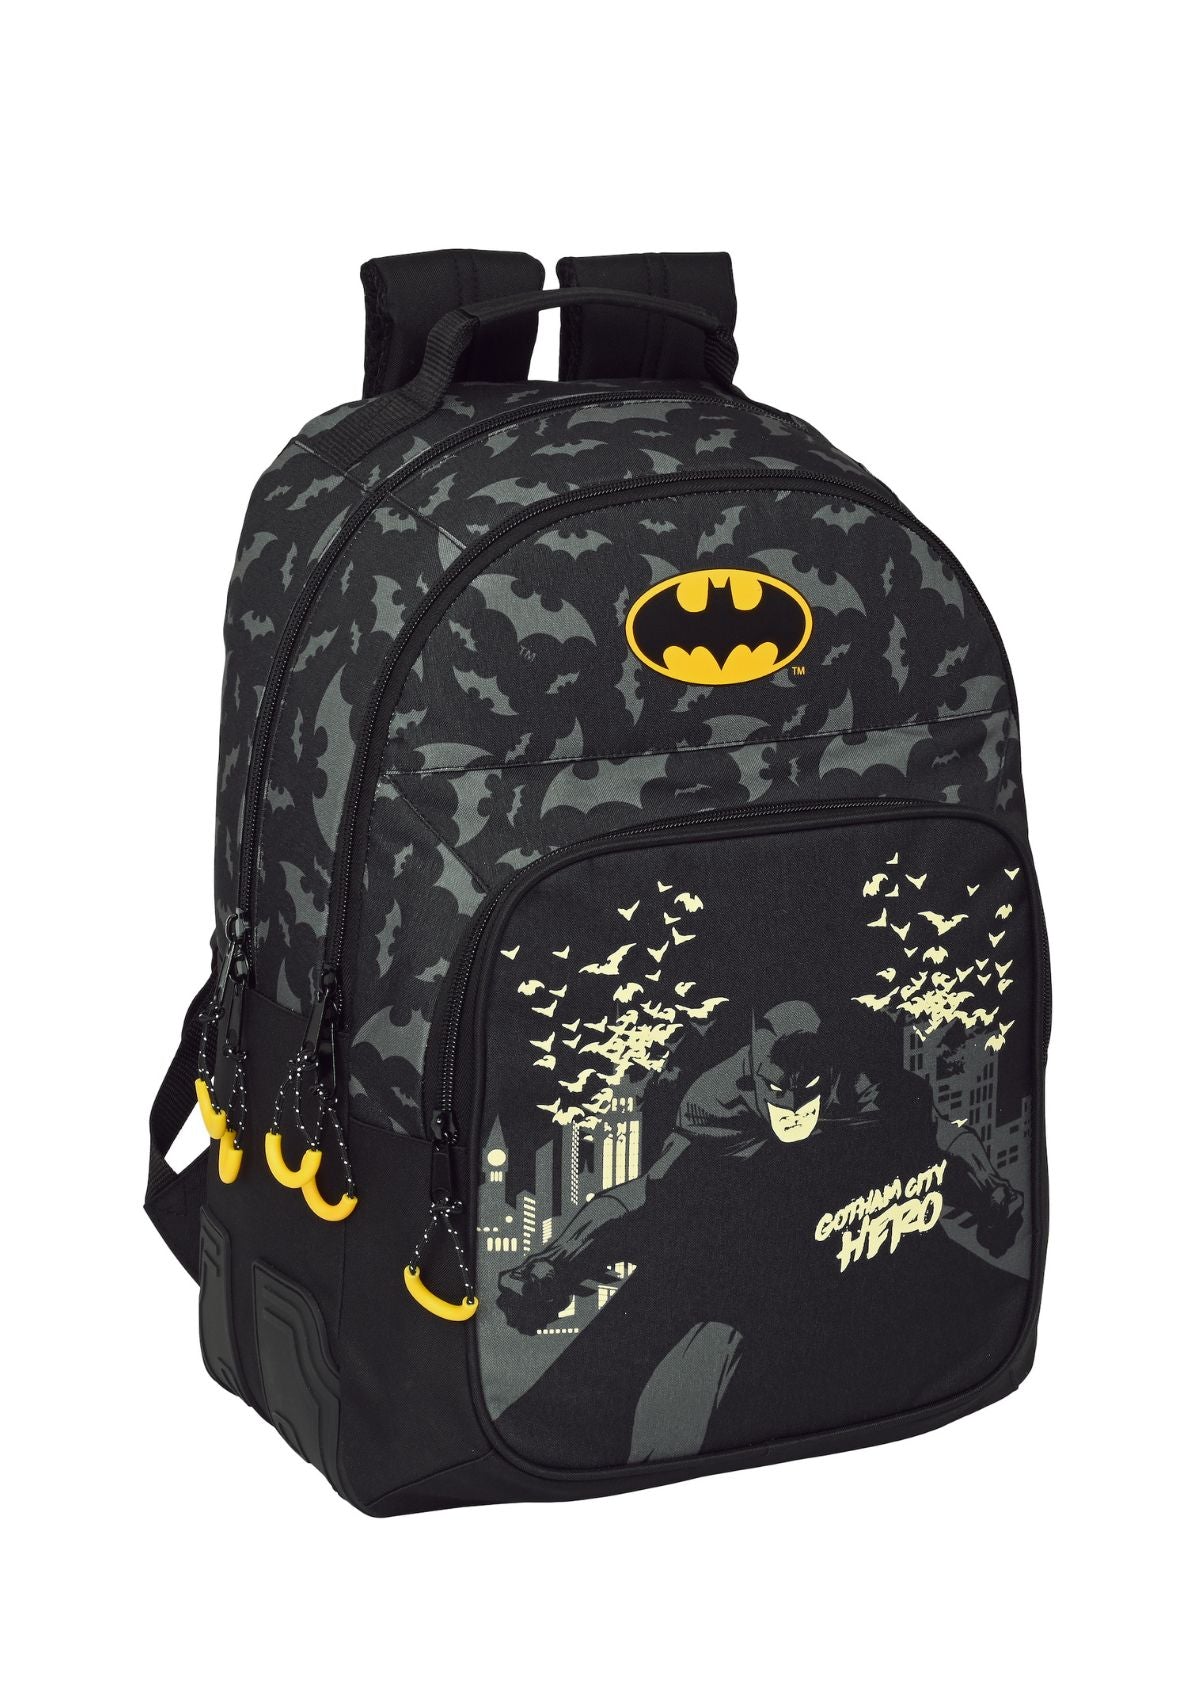 Safta Double Bagpack Batman front